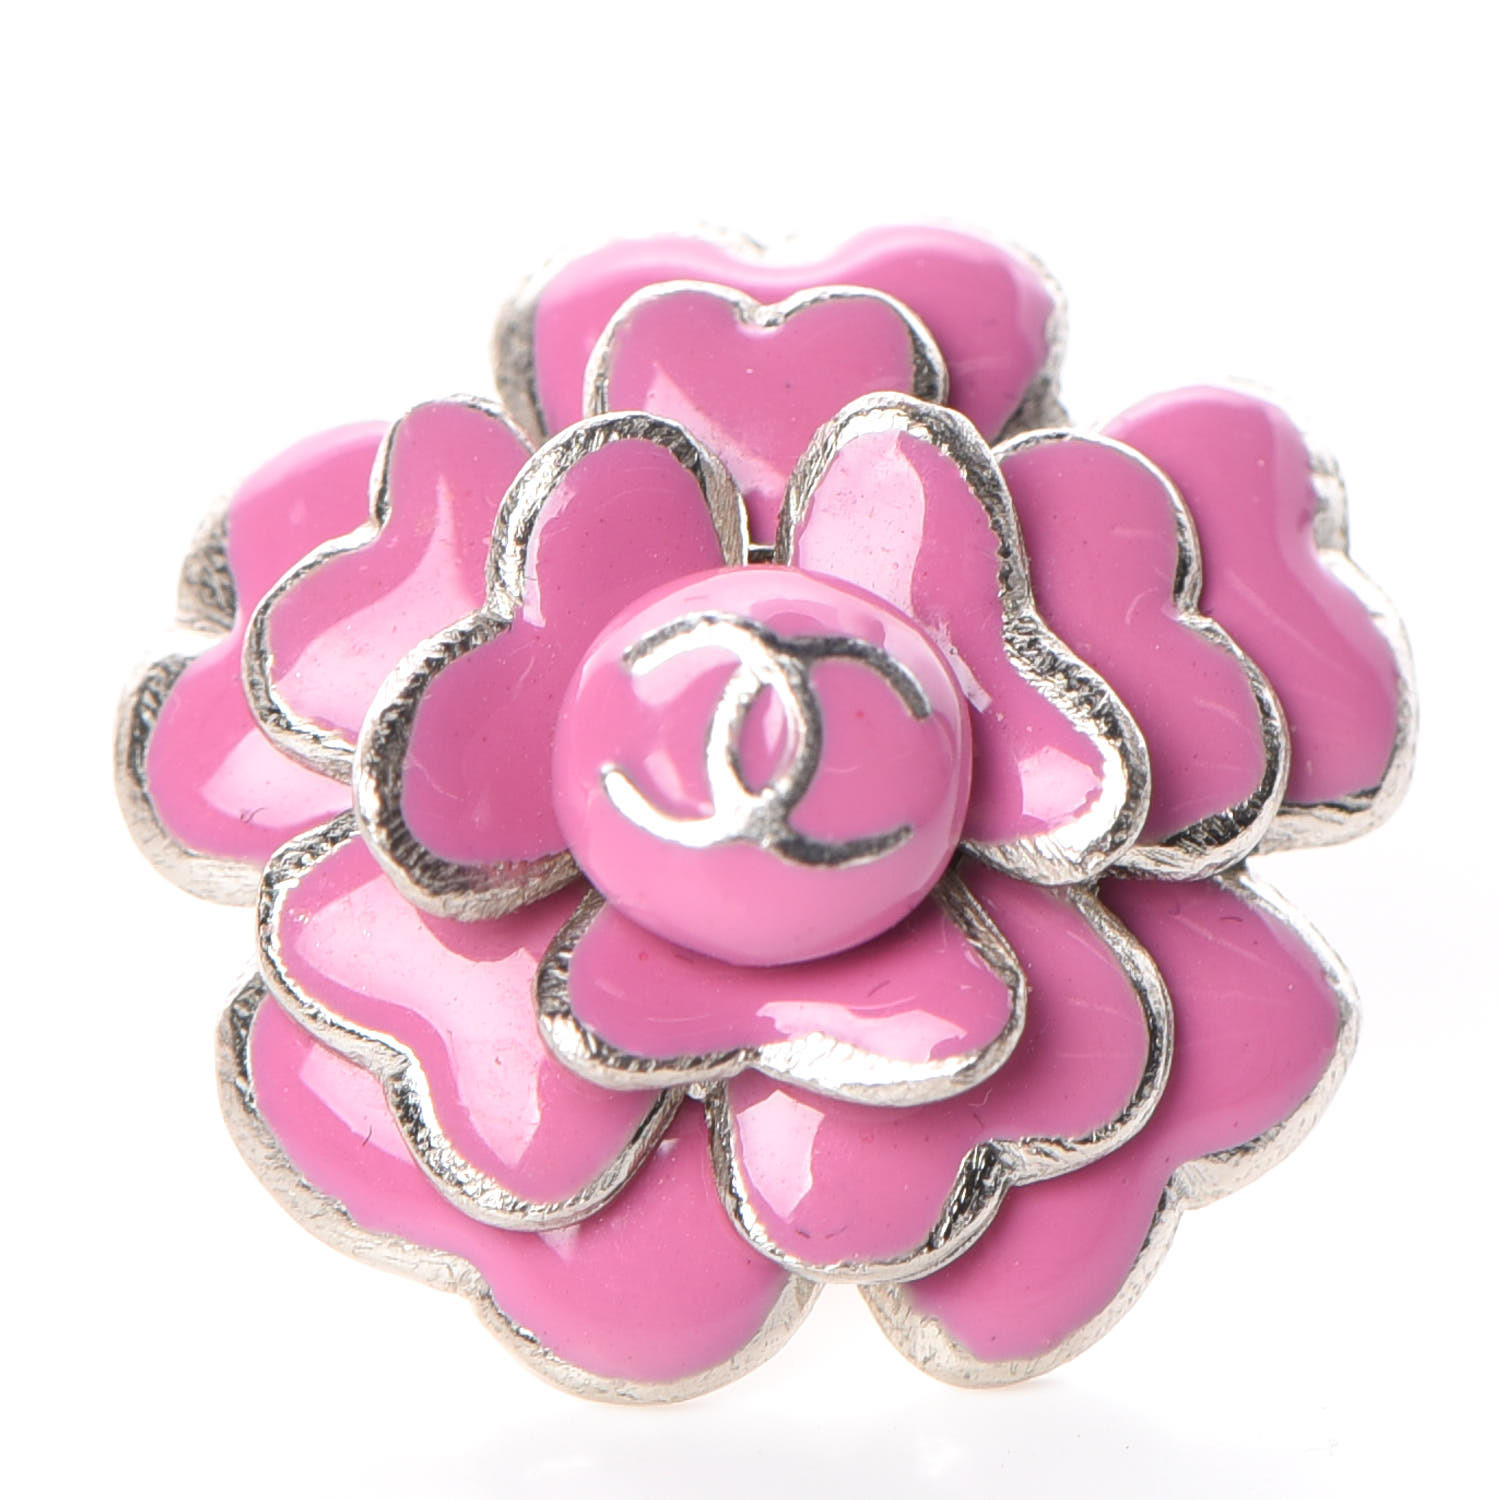 CHANEL Enamel CC Camellia Brooch Pin Pink 378472